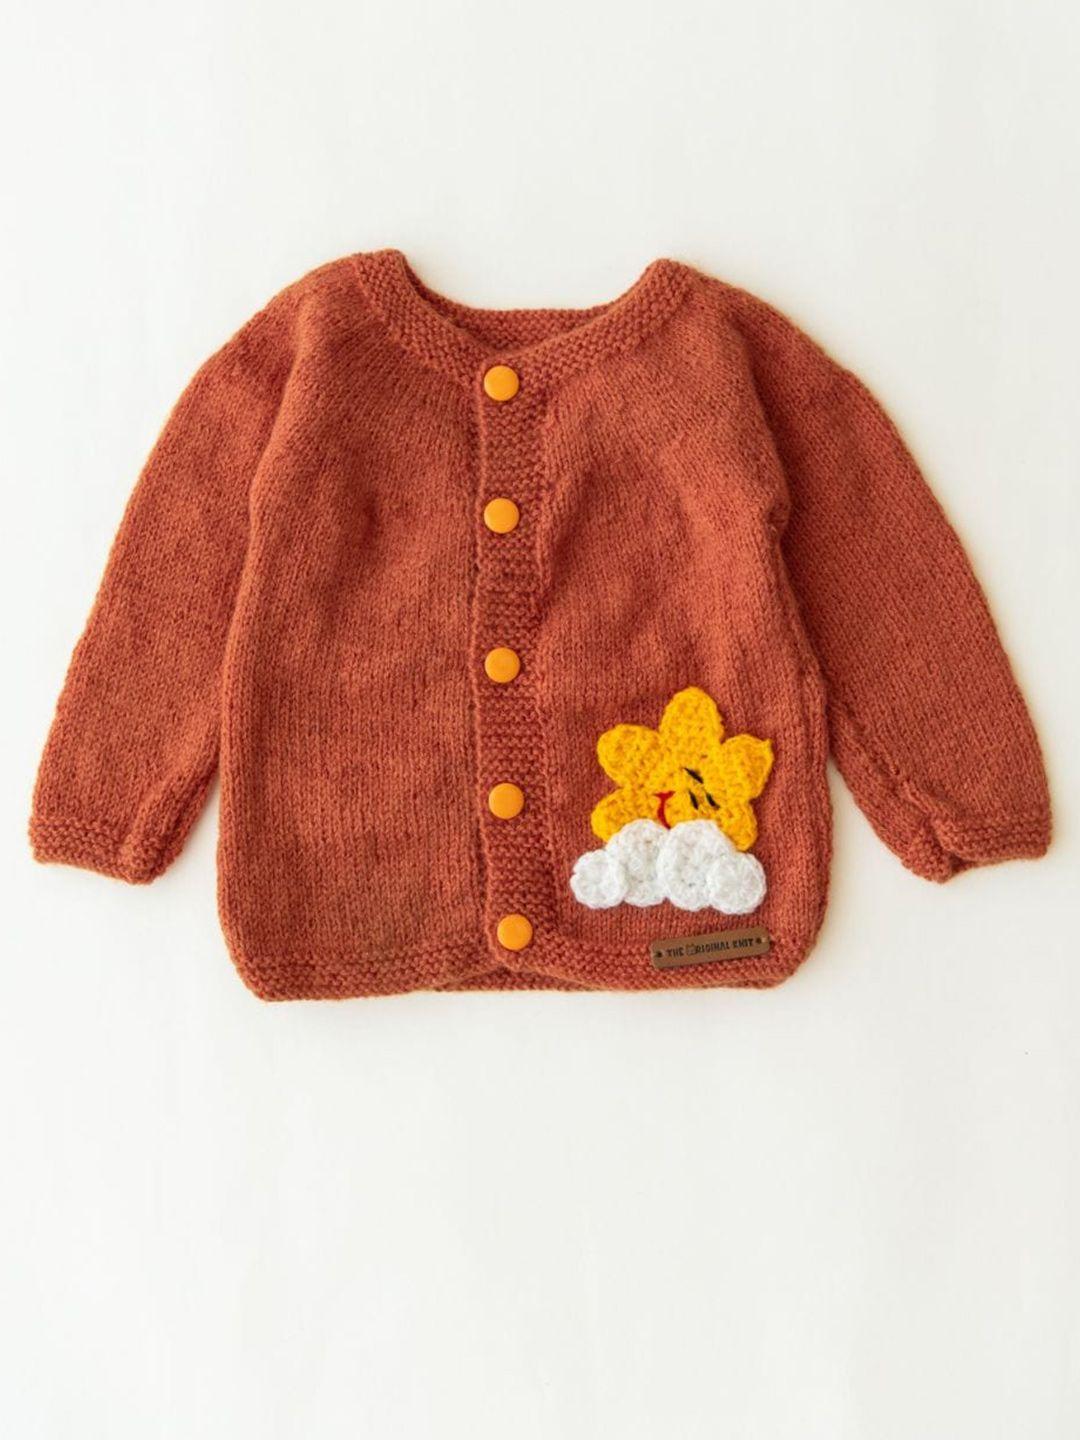 the original knit unisex kids rust & yellow cardigan